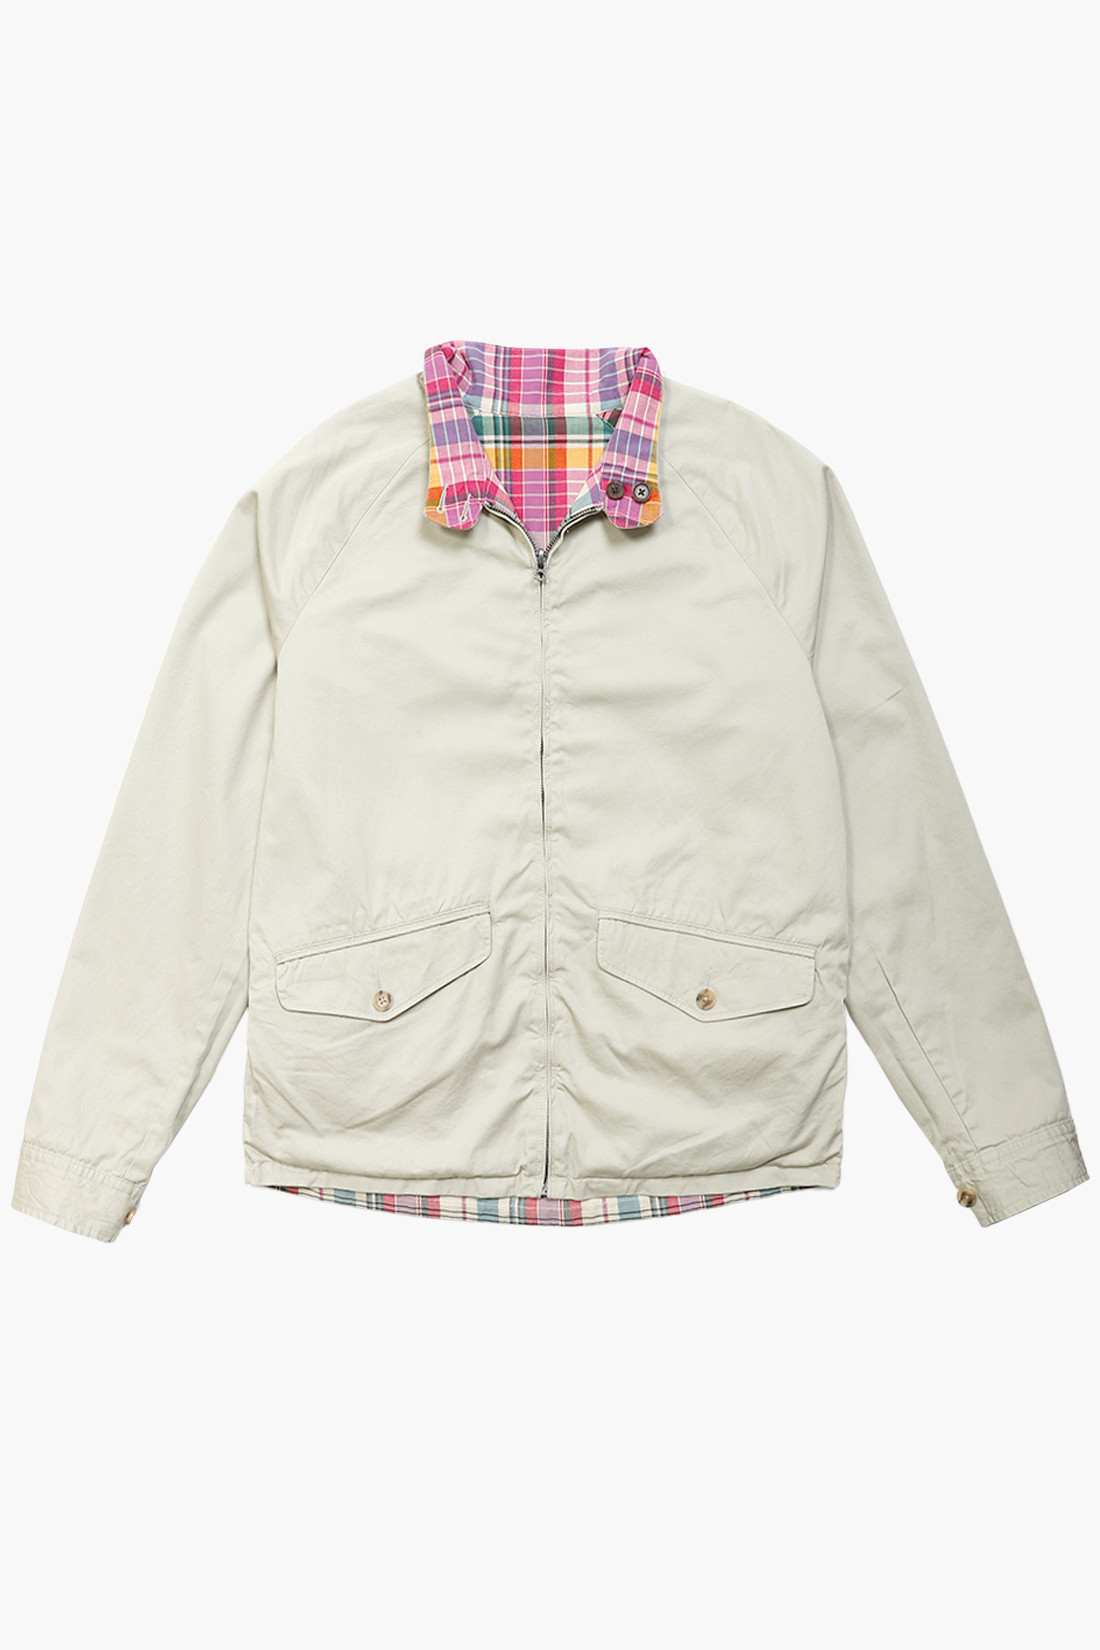 Polo ralph lauren Reversible madras twill jacket Multi - GRADUATE ... | FR